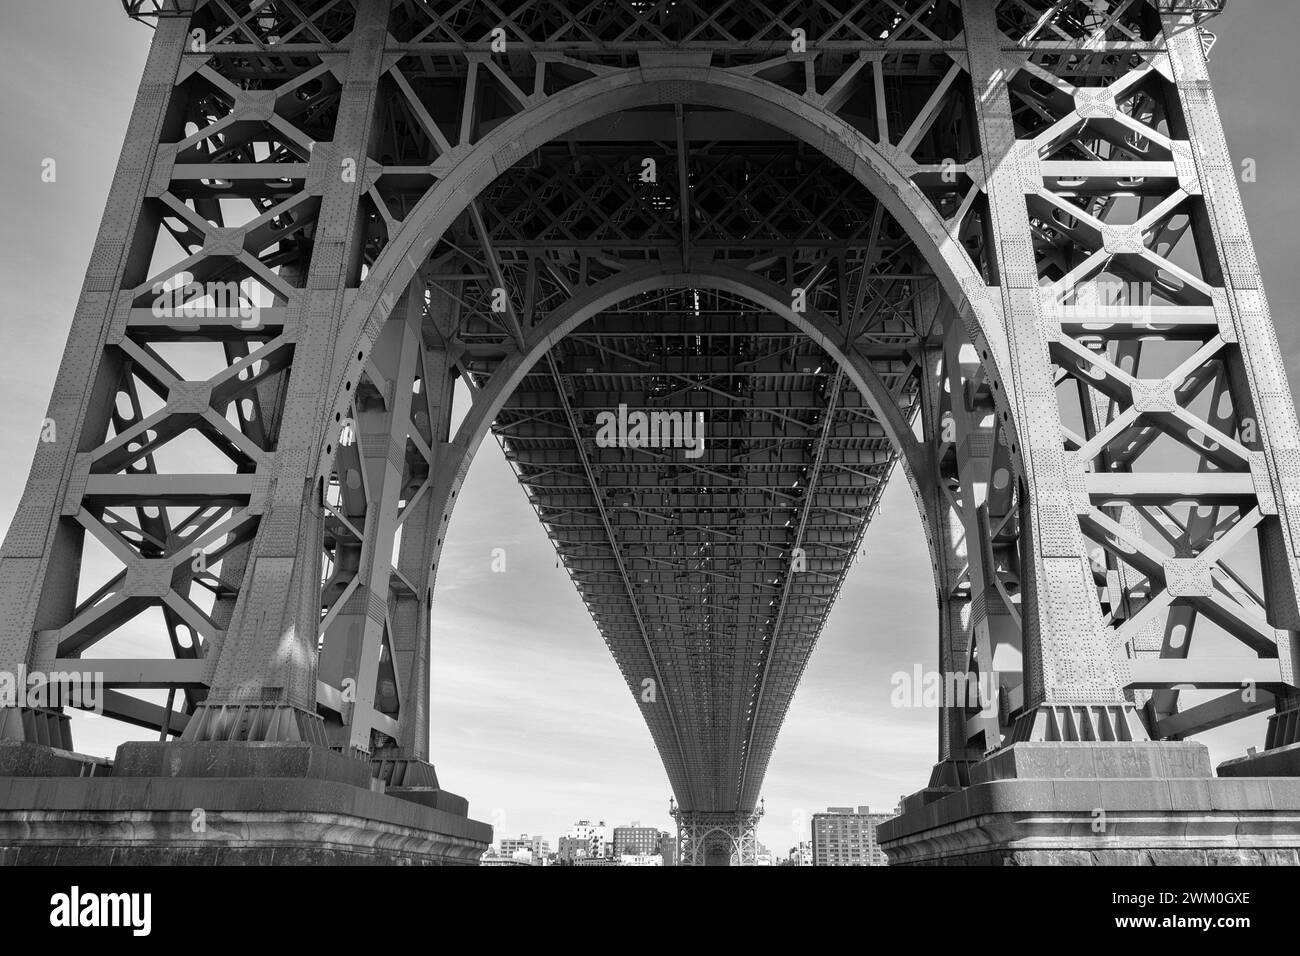 The Williamsburg Bridge connecting Manhattan to Brooklyn, NY Stock Photo